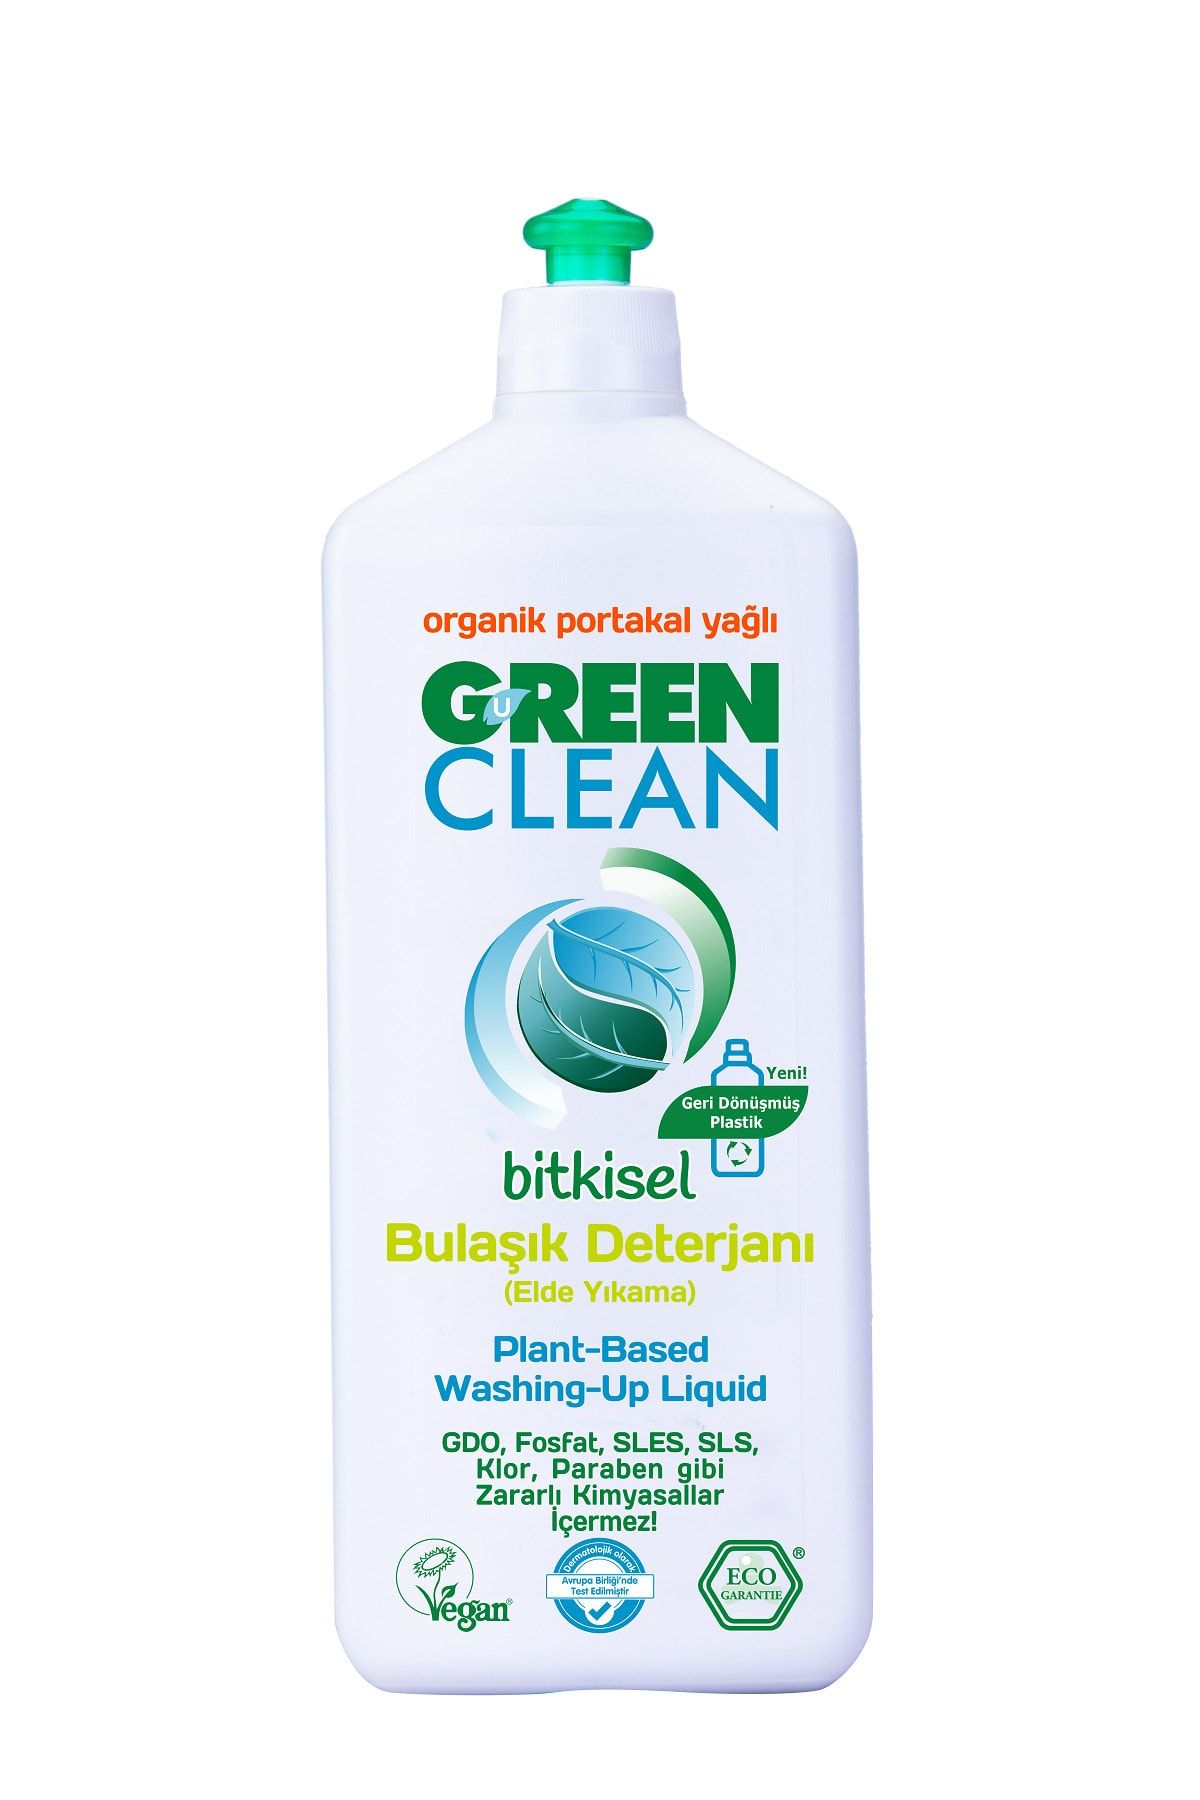 Green Clean BİTKİSEL BULAŞIK DETERJANI 730 ML.